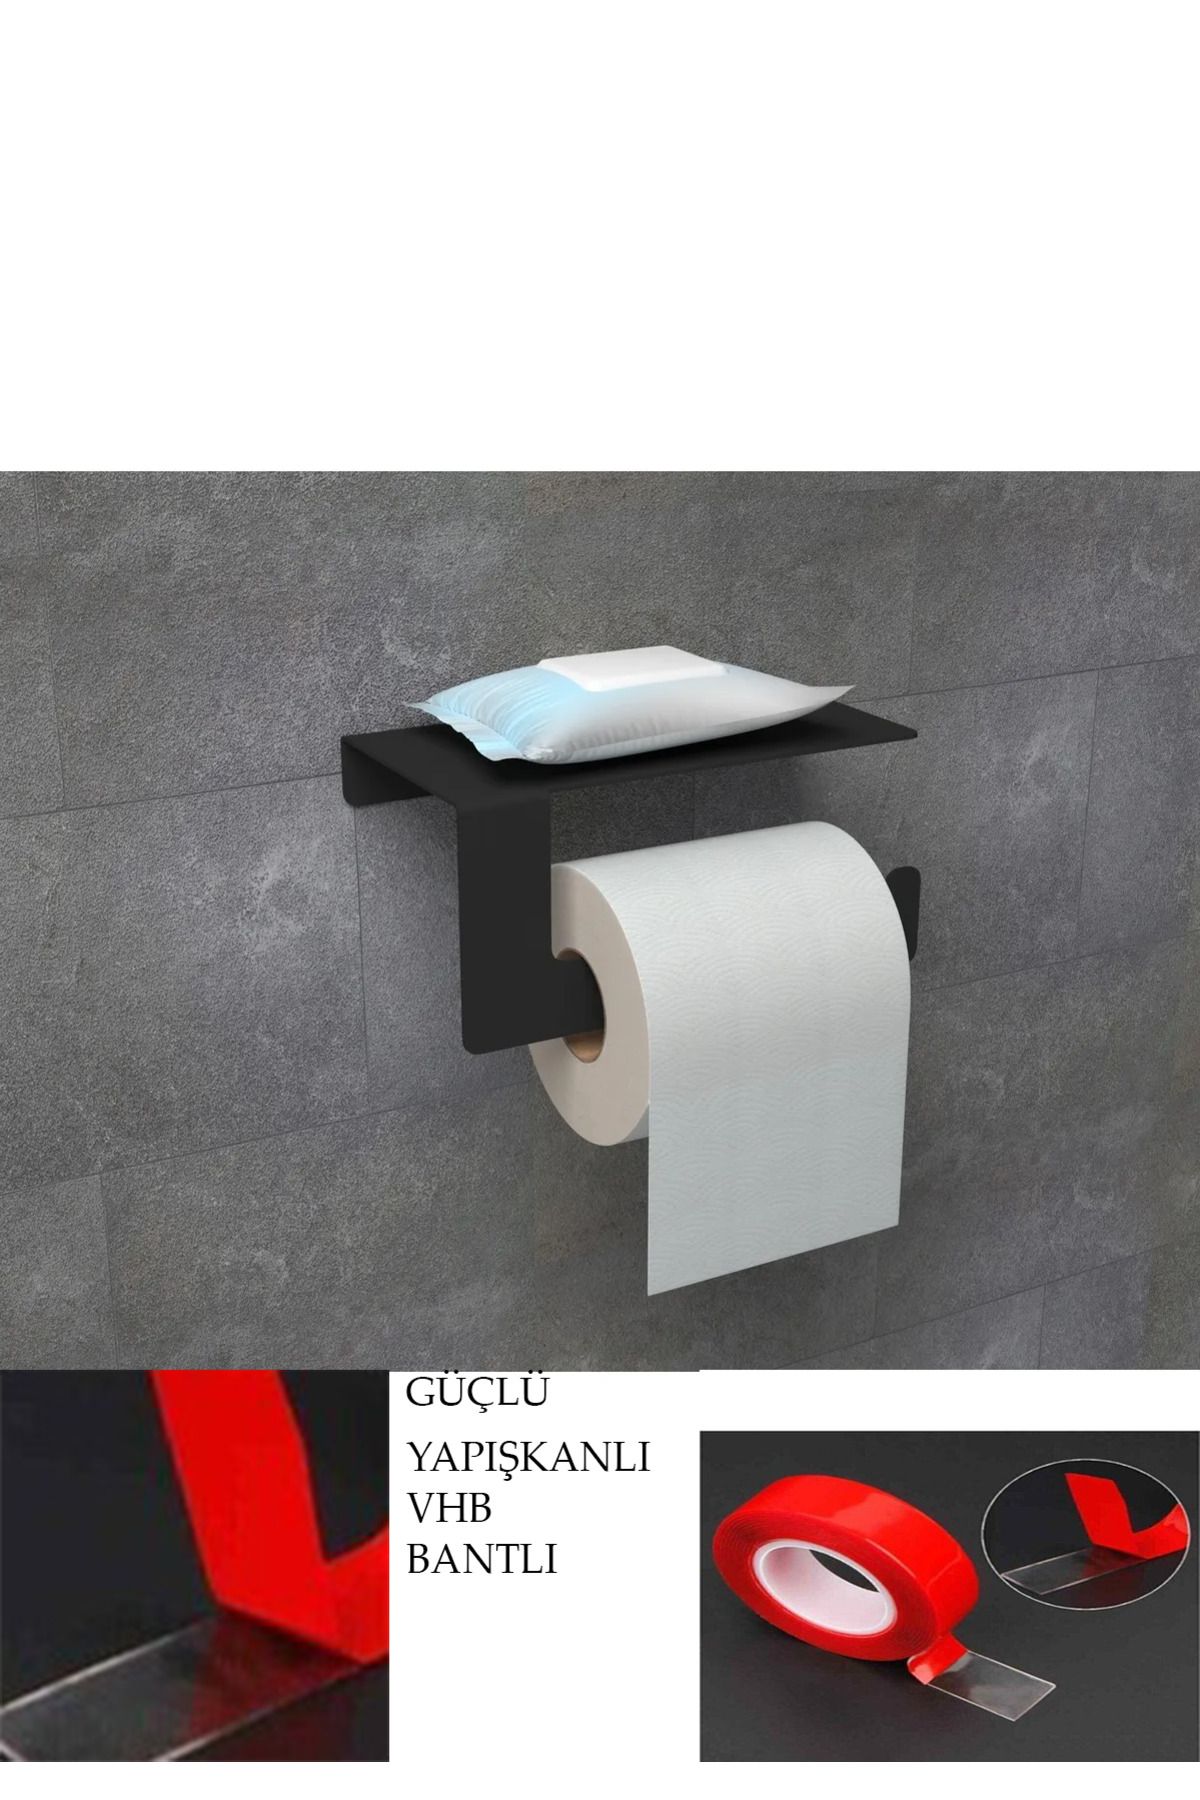 kraker Güçlü Vhb Bant Yapışkanlı Metal Mat Siyah Telefon Raflı Tuvalet Kağıtlık